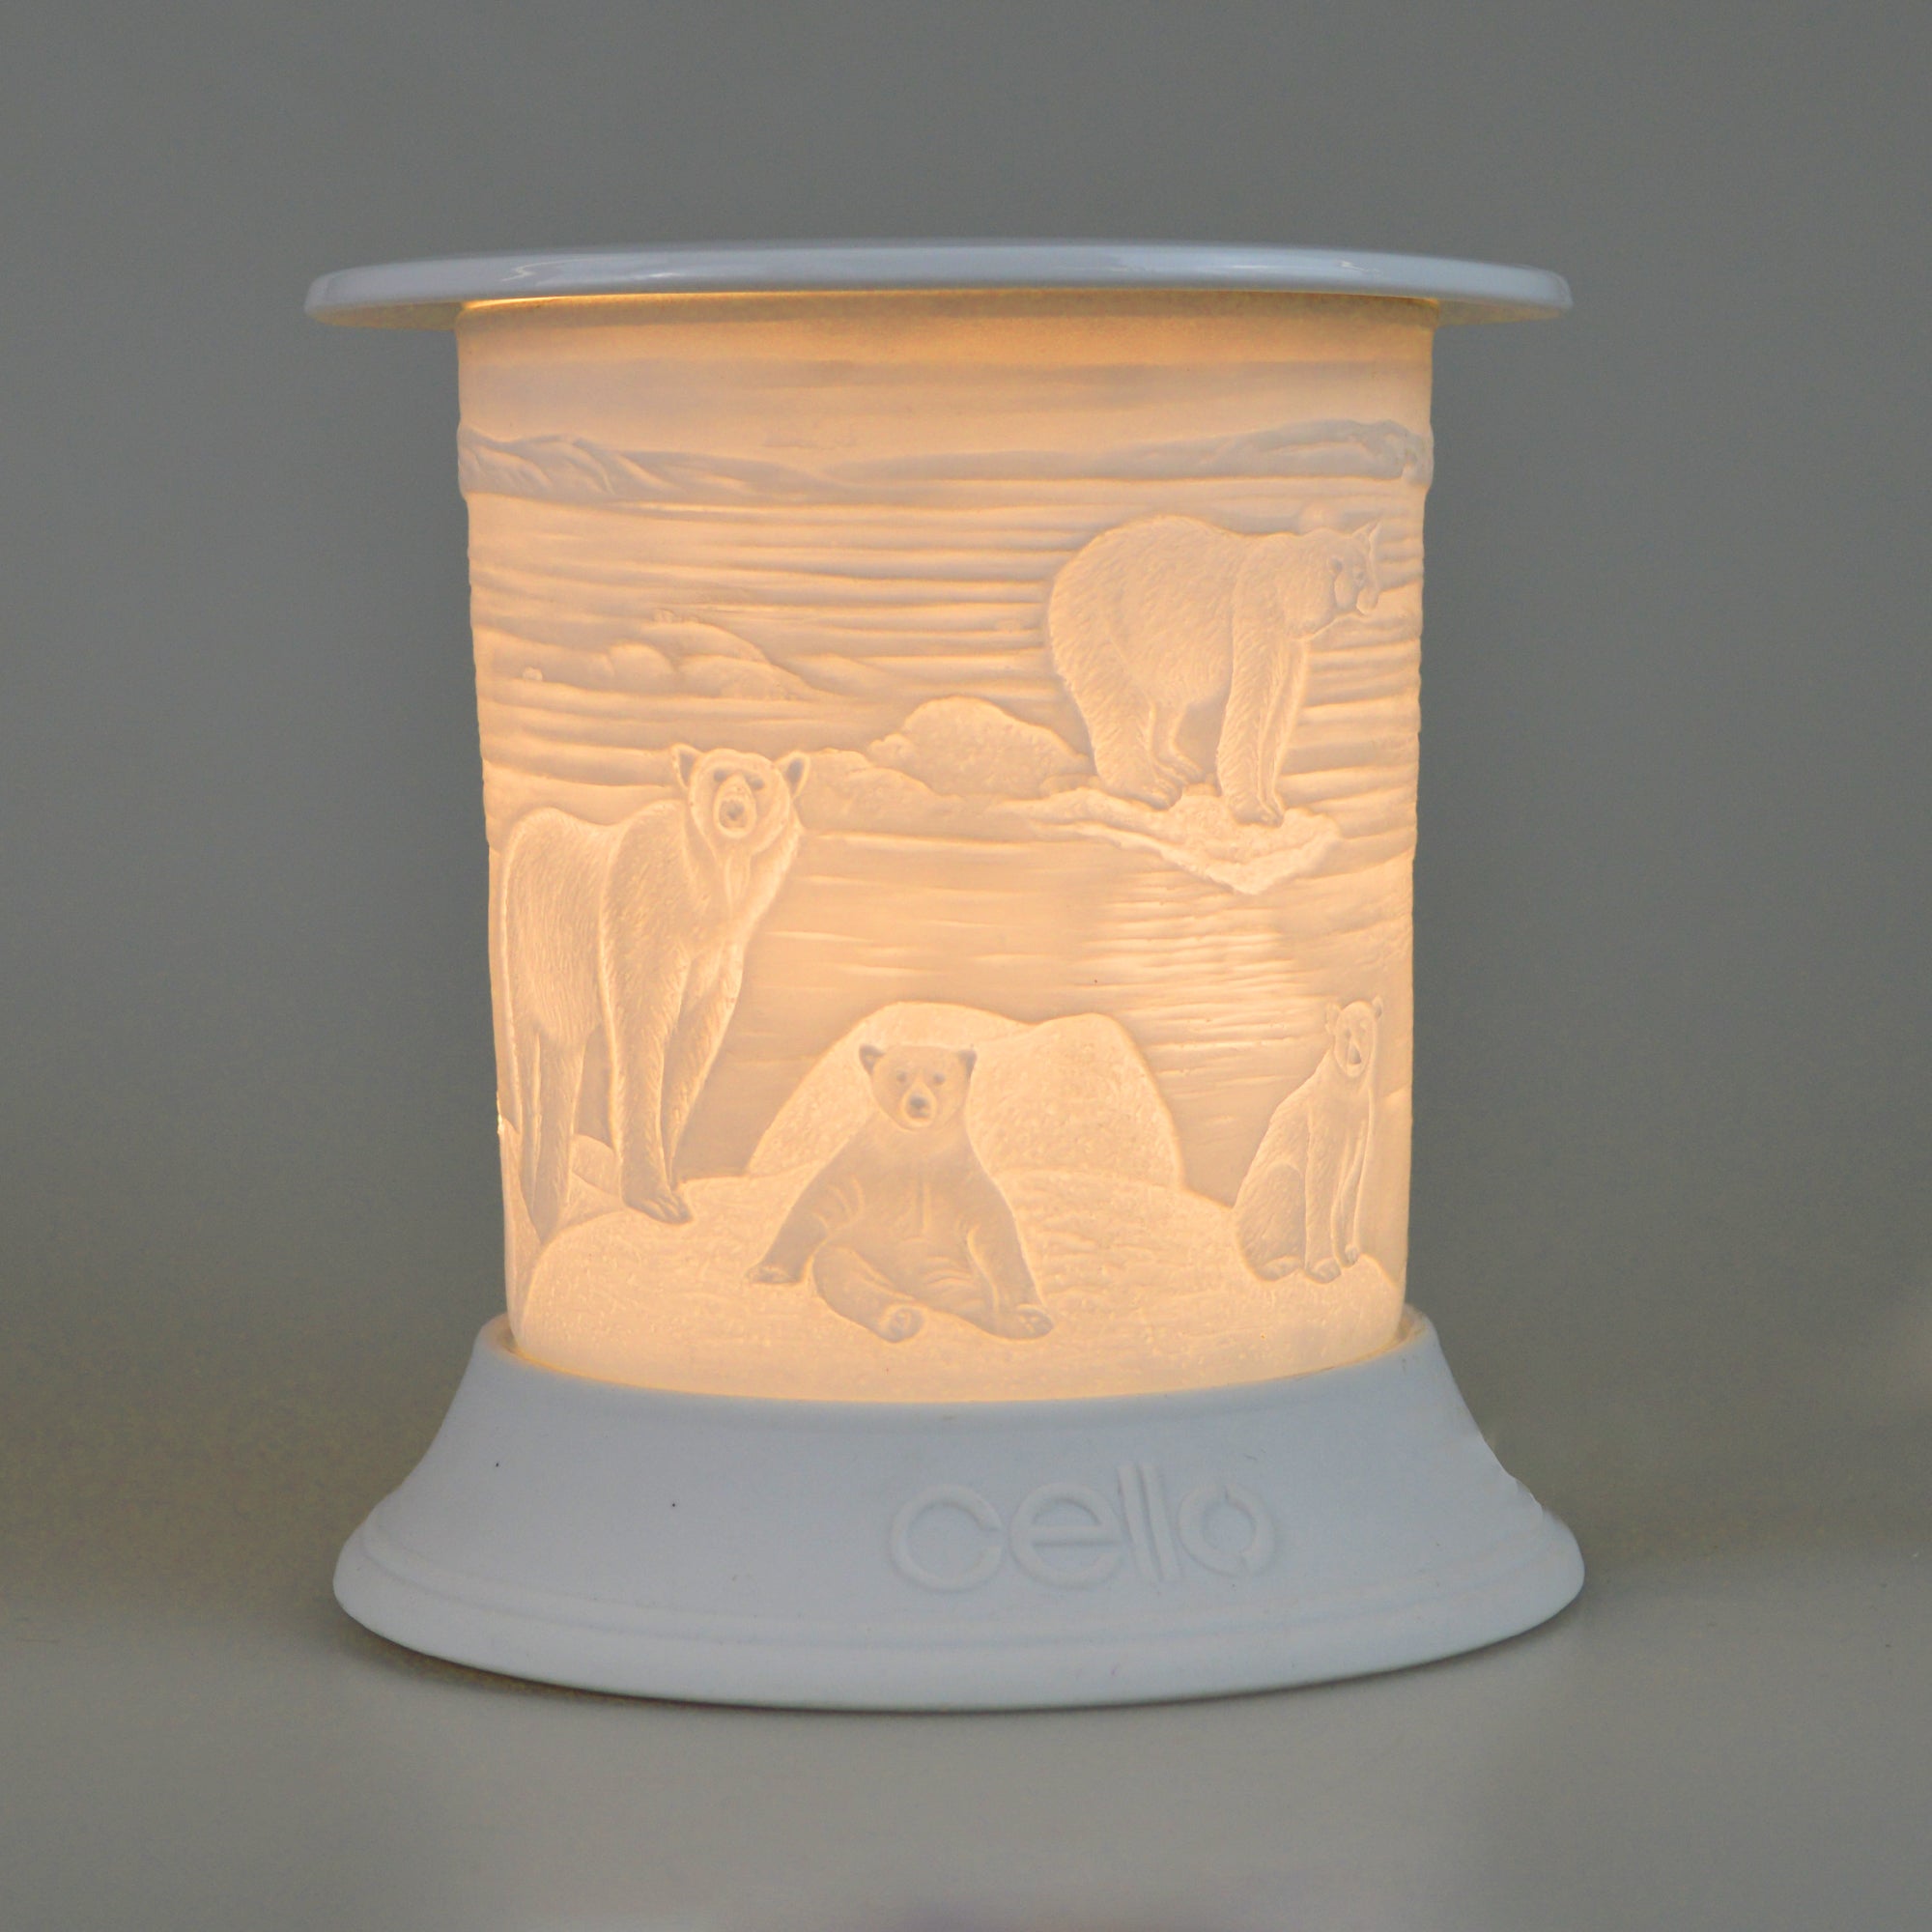 Cello - Polar Bear Straight Porcelain Electric Wax Burner